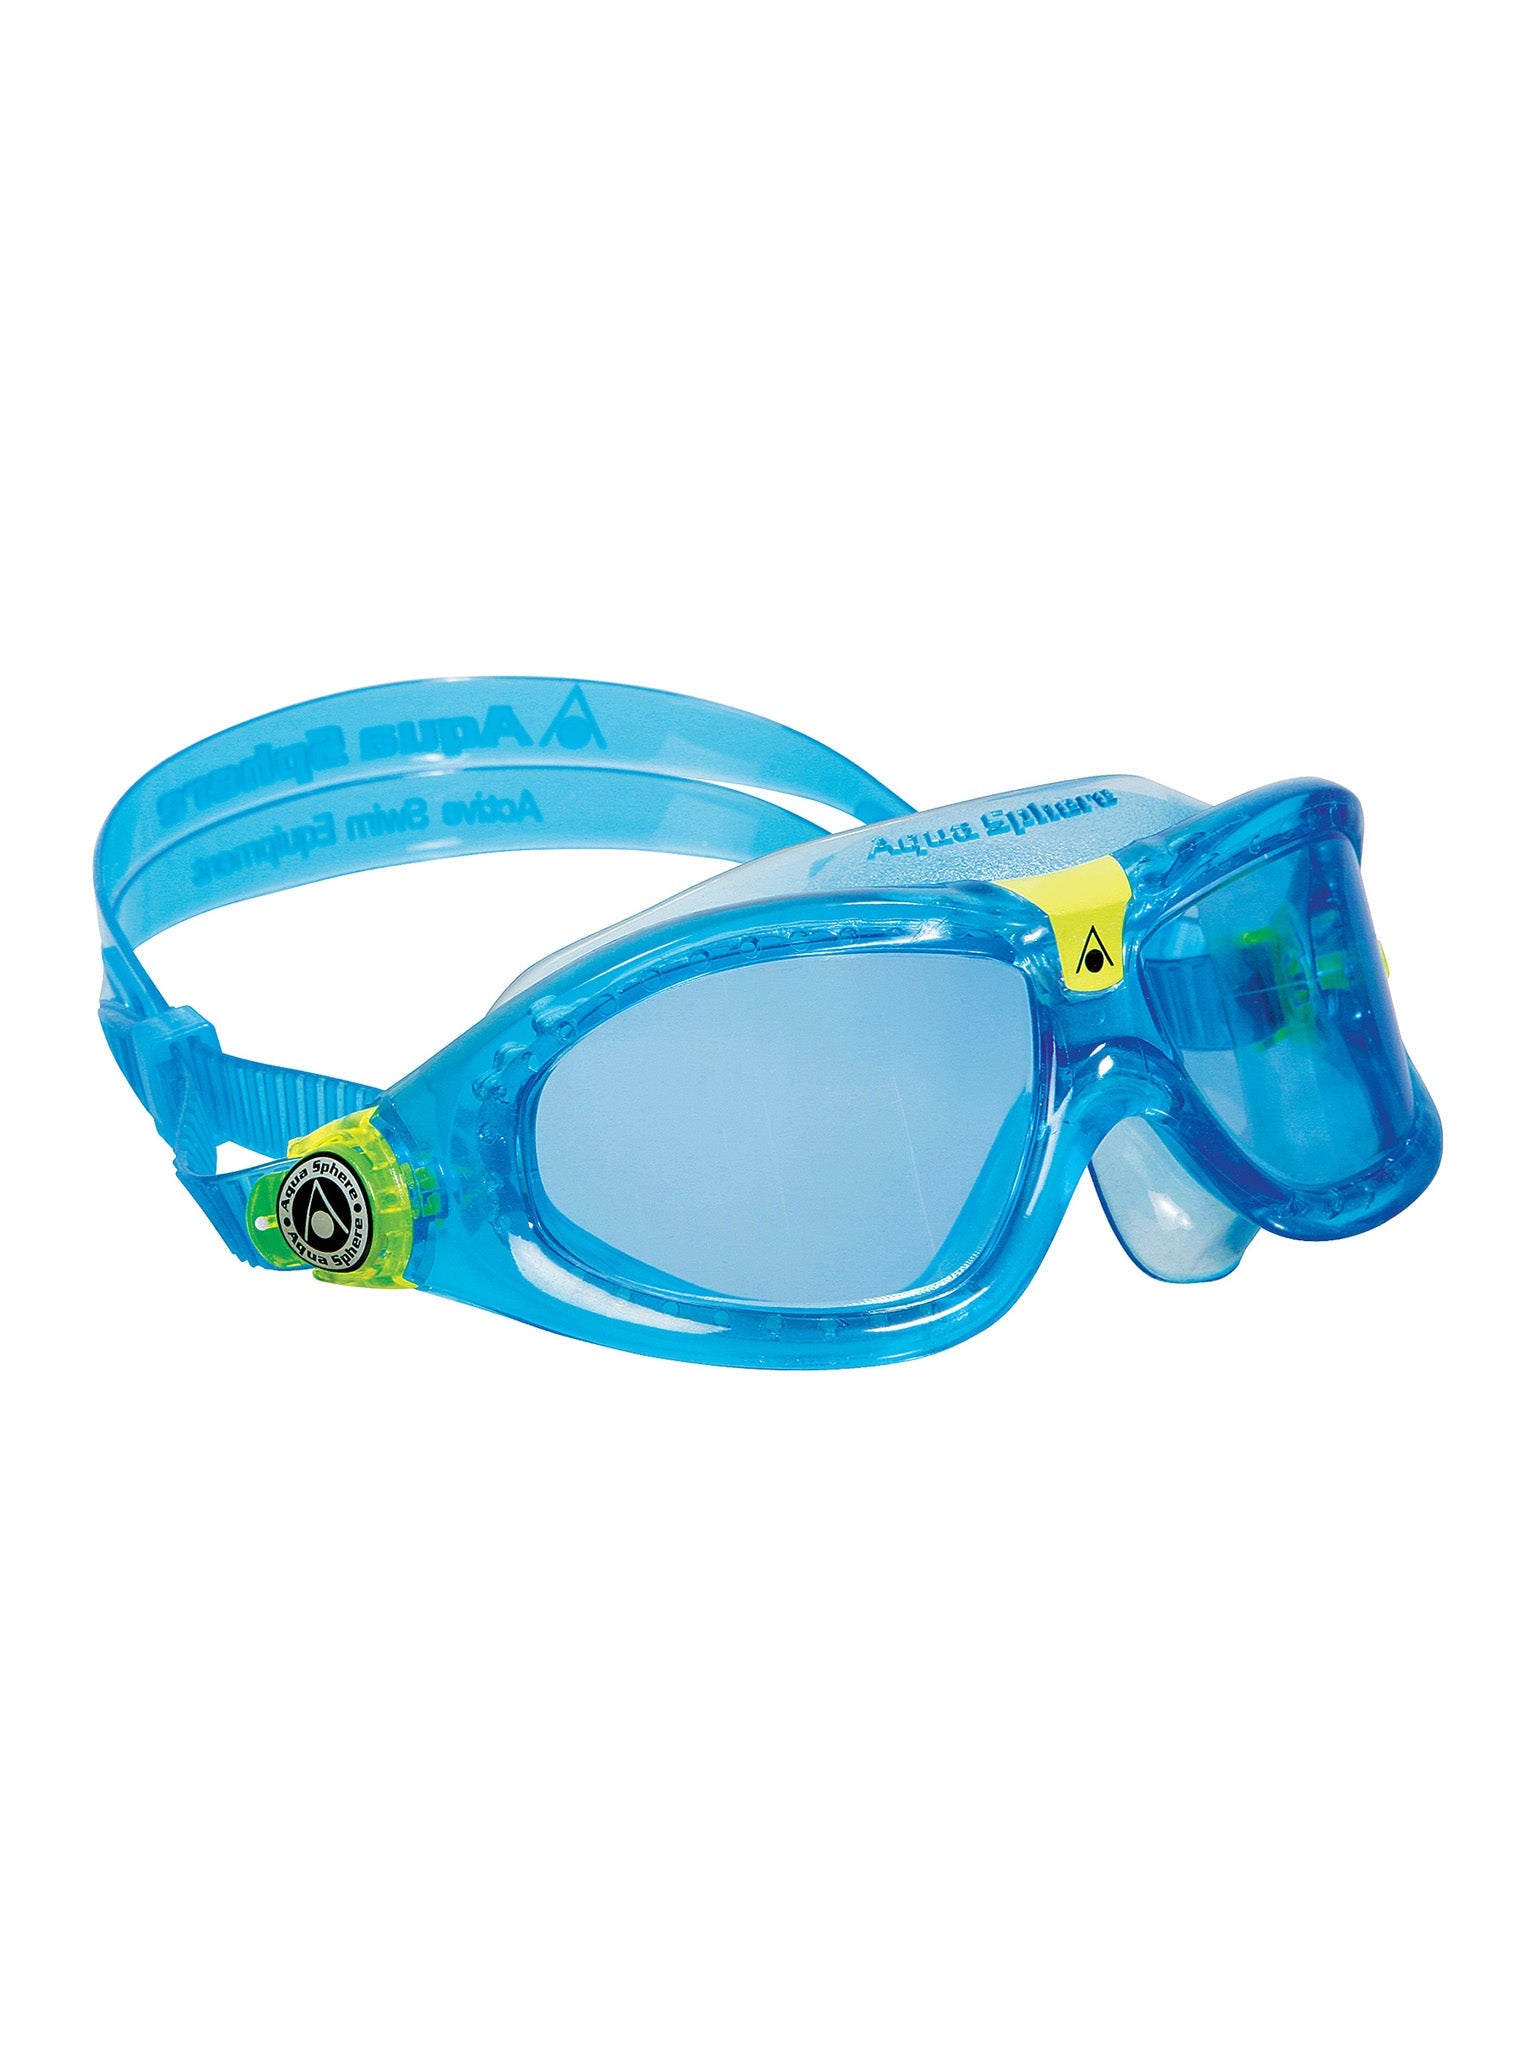 Seal kids 2.0 Swim Goggles - Blue/Blue